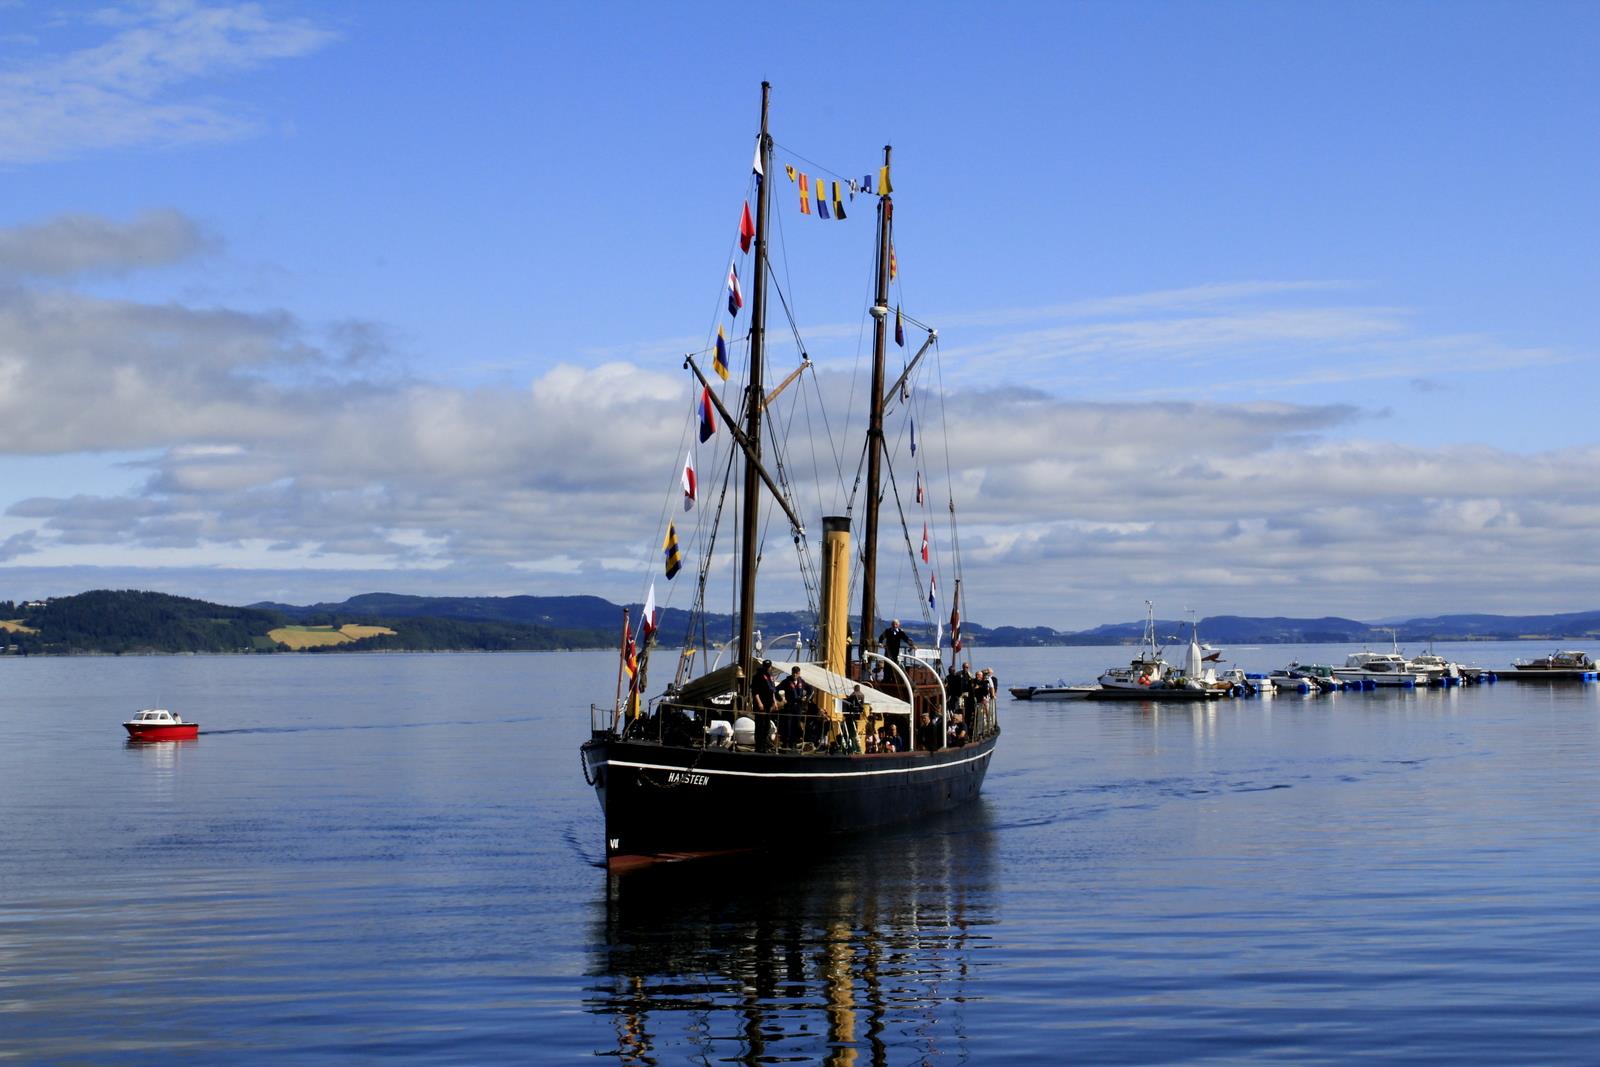 Bli med på en eventyrlig seilas på Trondheimsfjorden